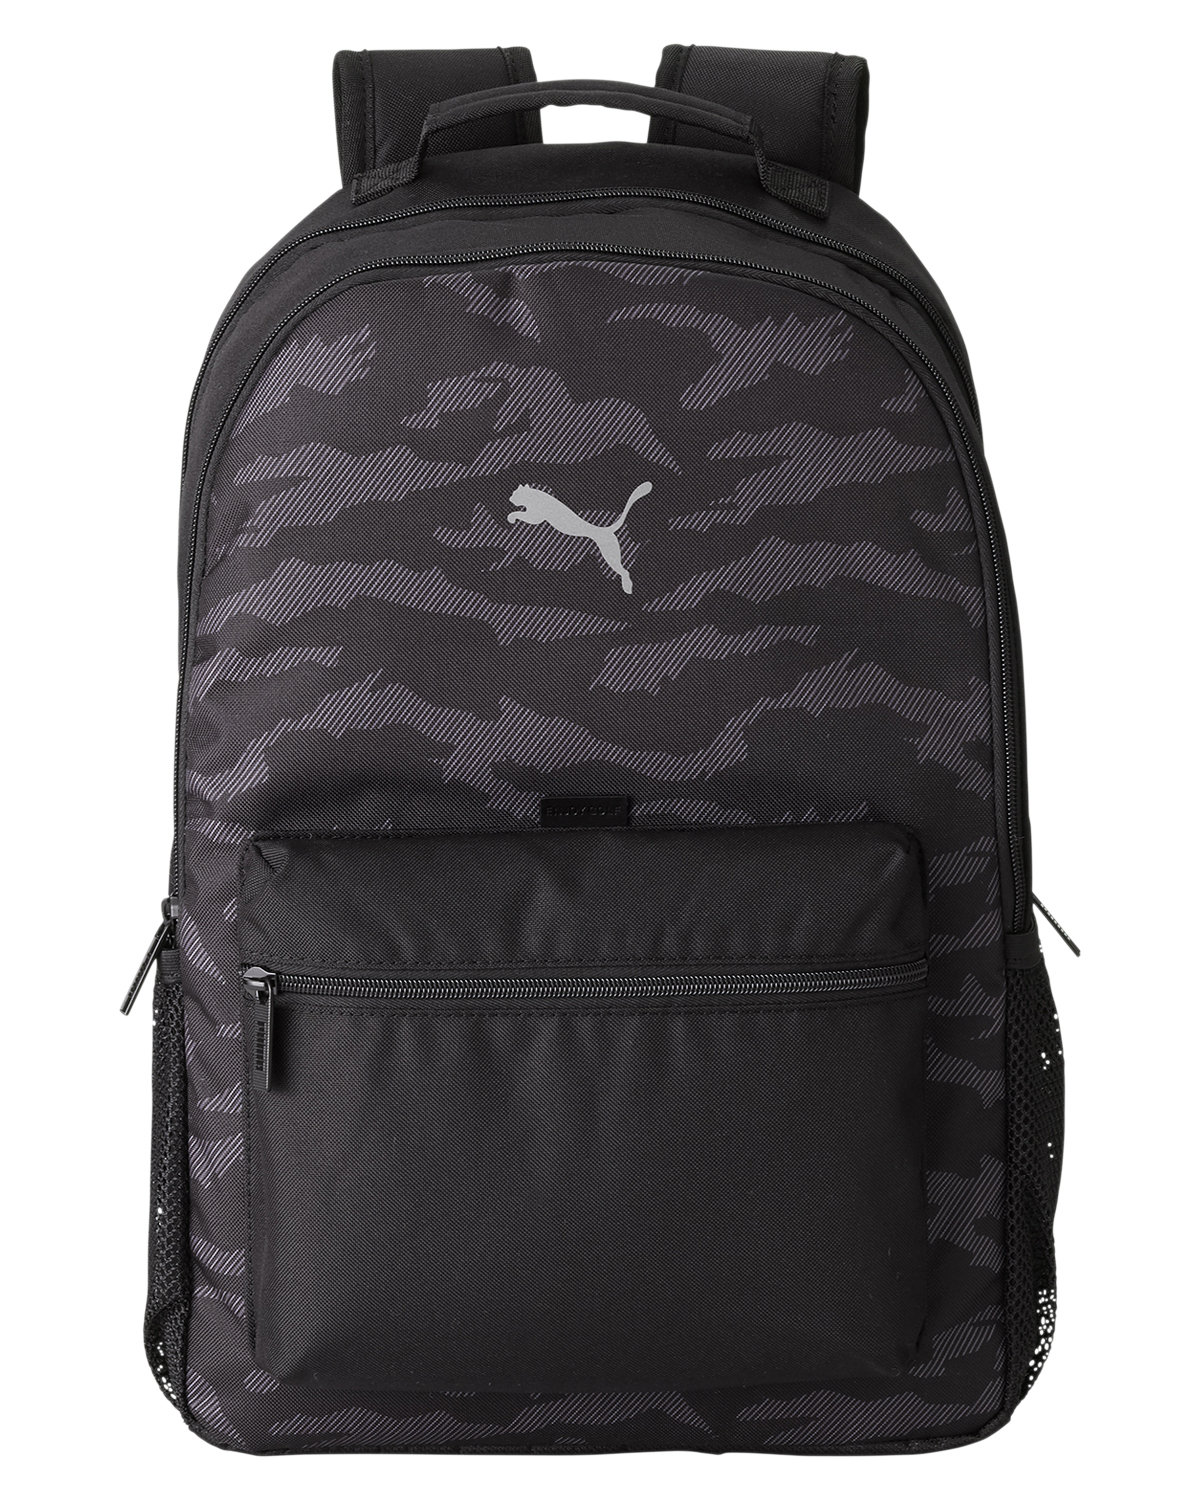 Puma 78120 - Golf Camo Backpack